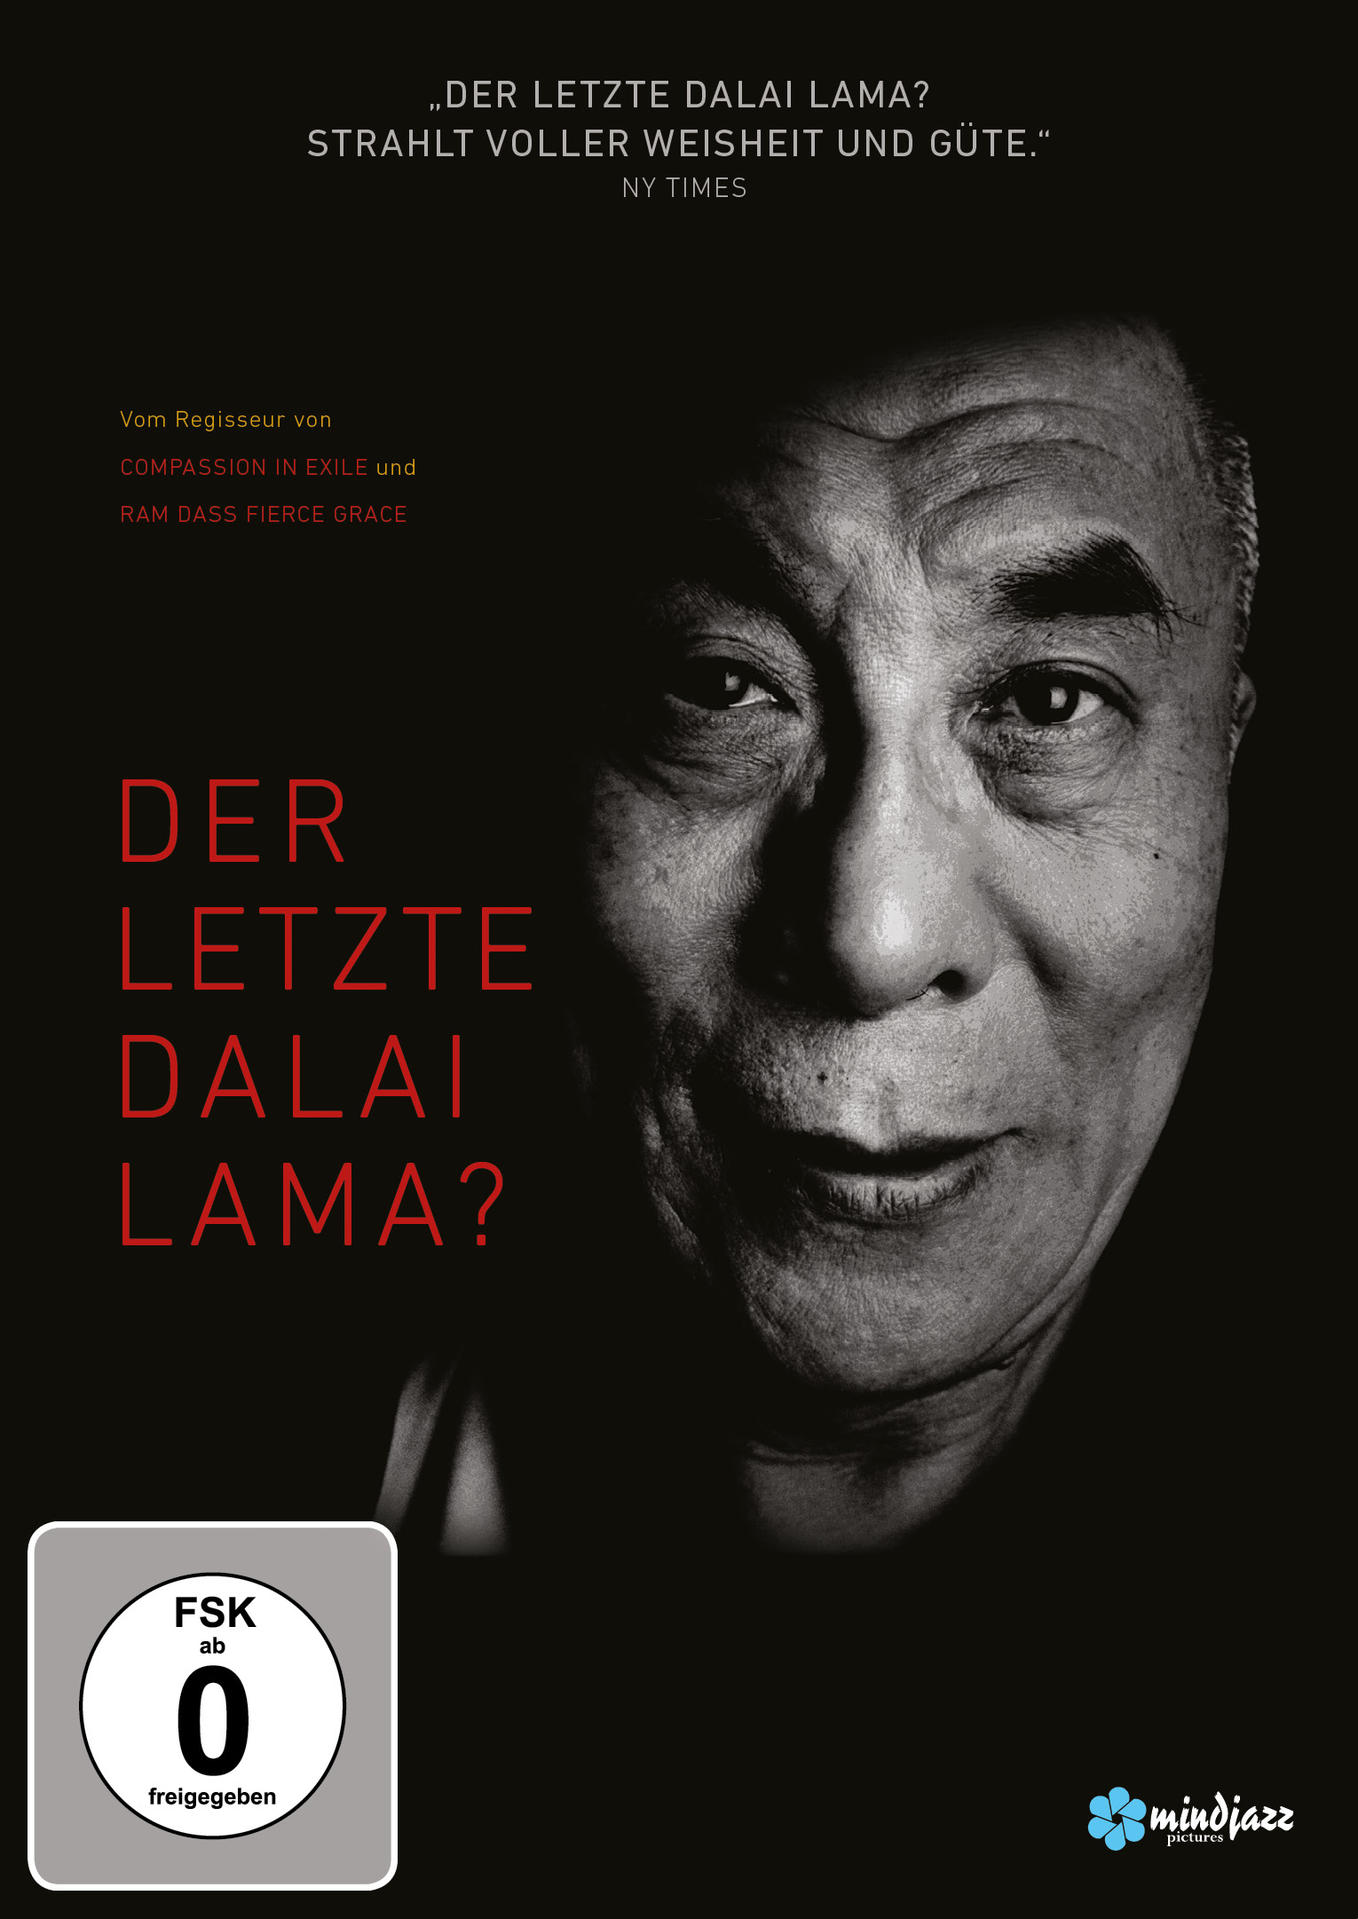 Der - letzte Dalai (DVD) Lama?